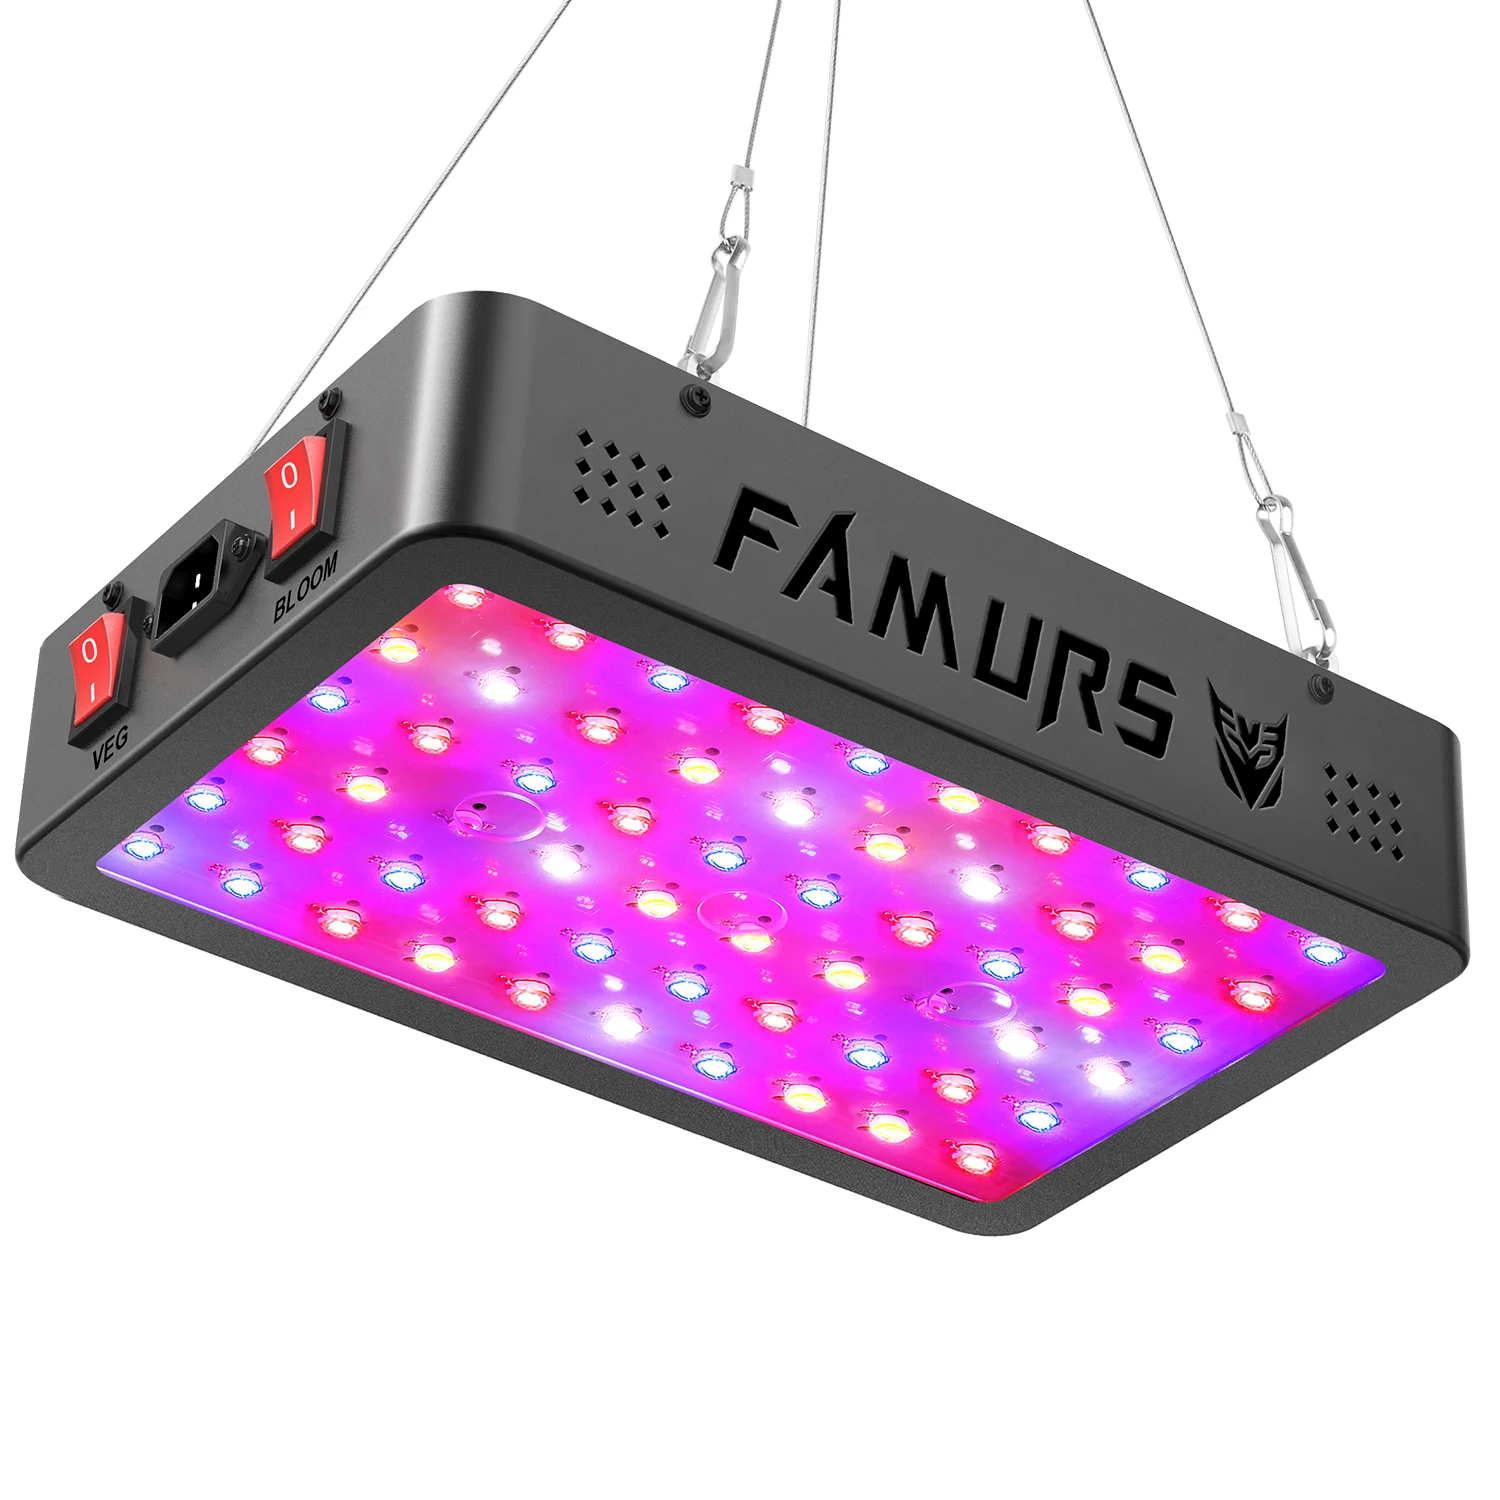 US Warehouse Tariffs Free FAMURS 600W VEG BLOOM IR&UV LED Grow Light Full Spectrum for Greenhouse Indoor Plant